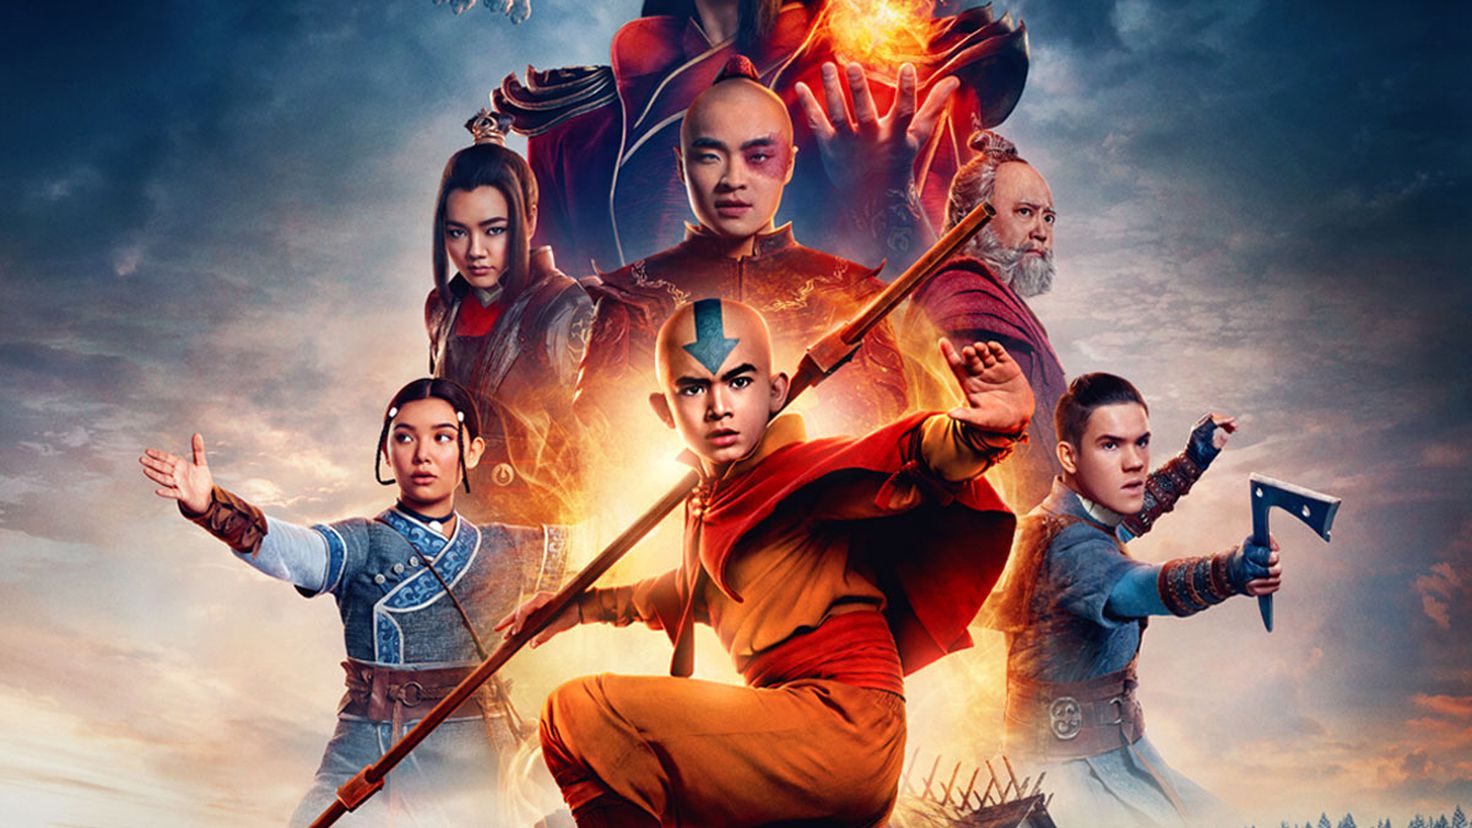 Netflix’s Avatar The Last Airbender unveils its first trailer